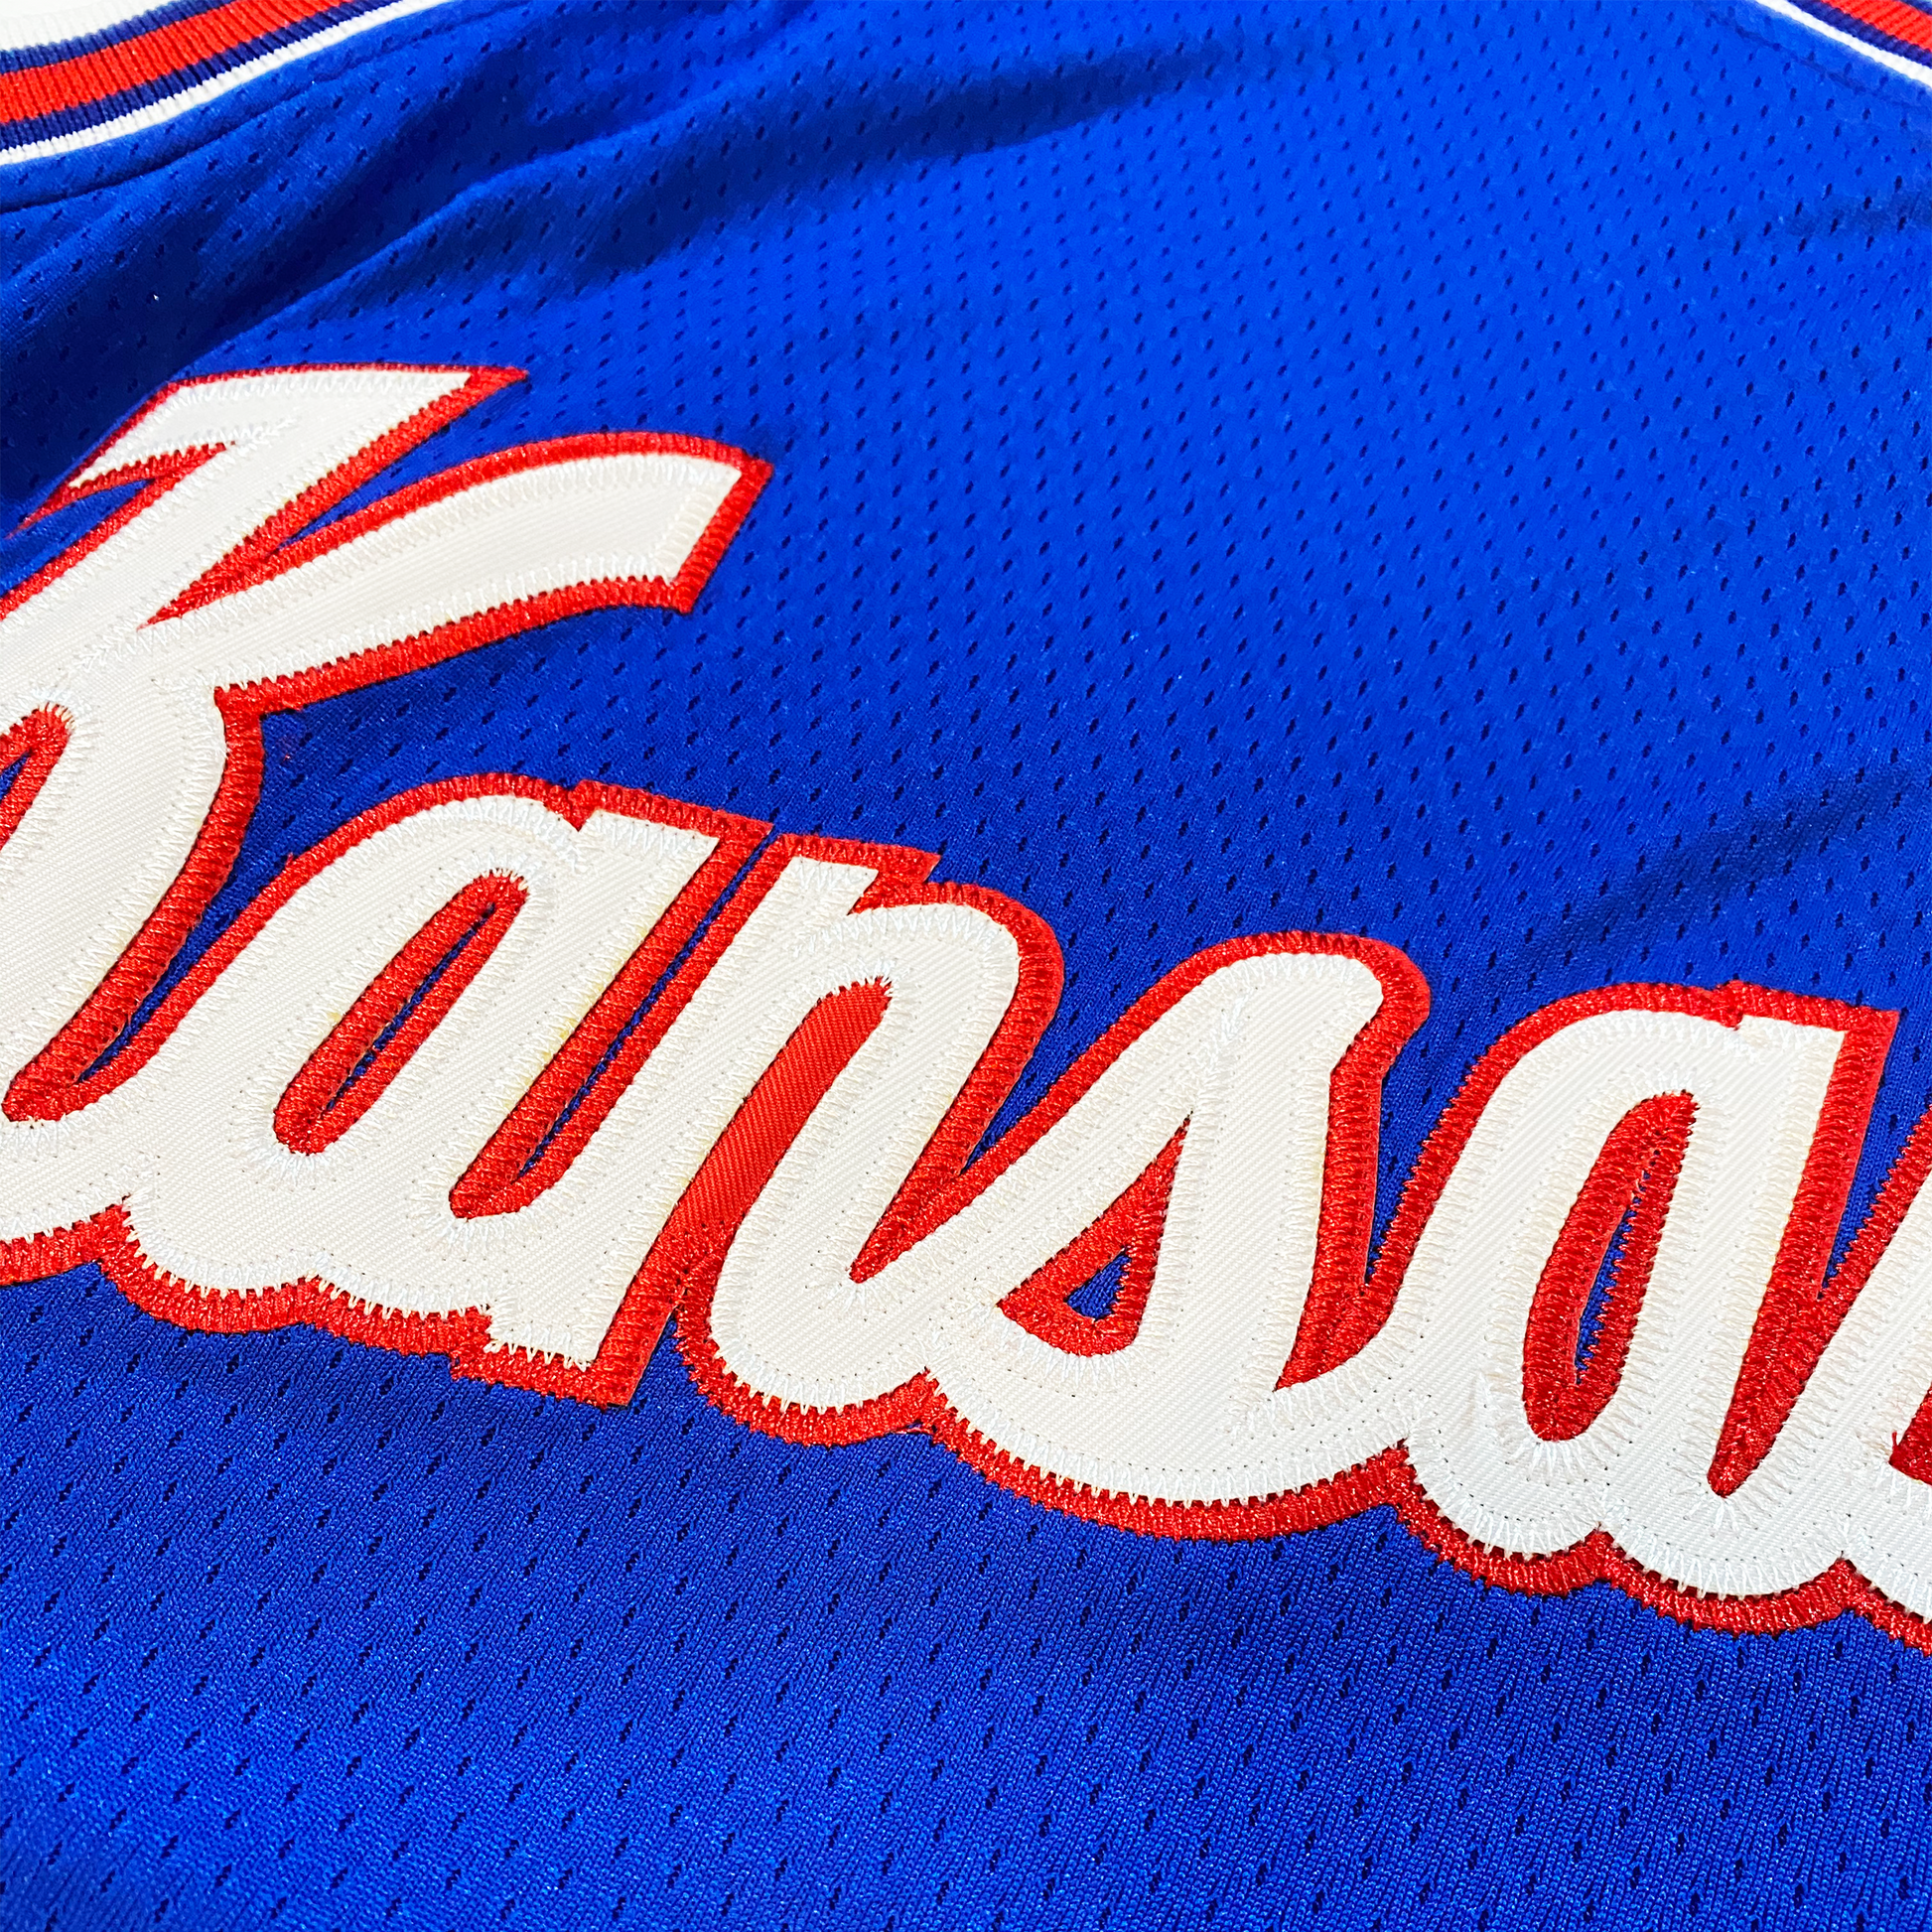 Kansas City Basketball Jersey - Blue - 4XL - Royal Retros